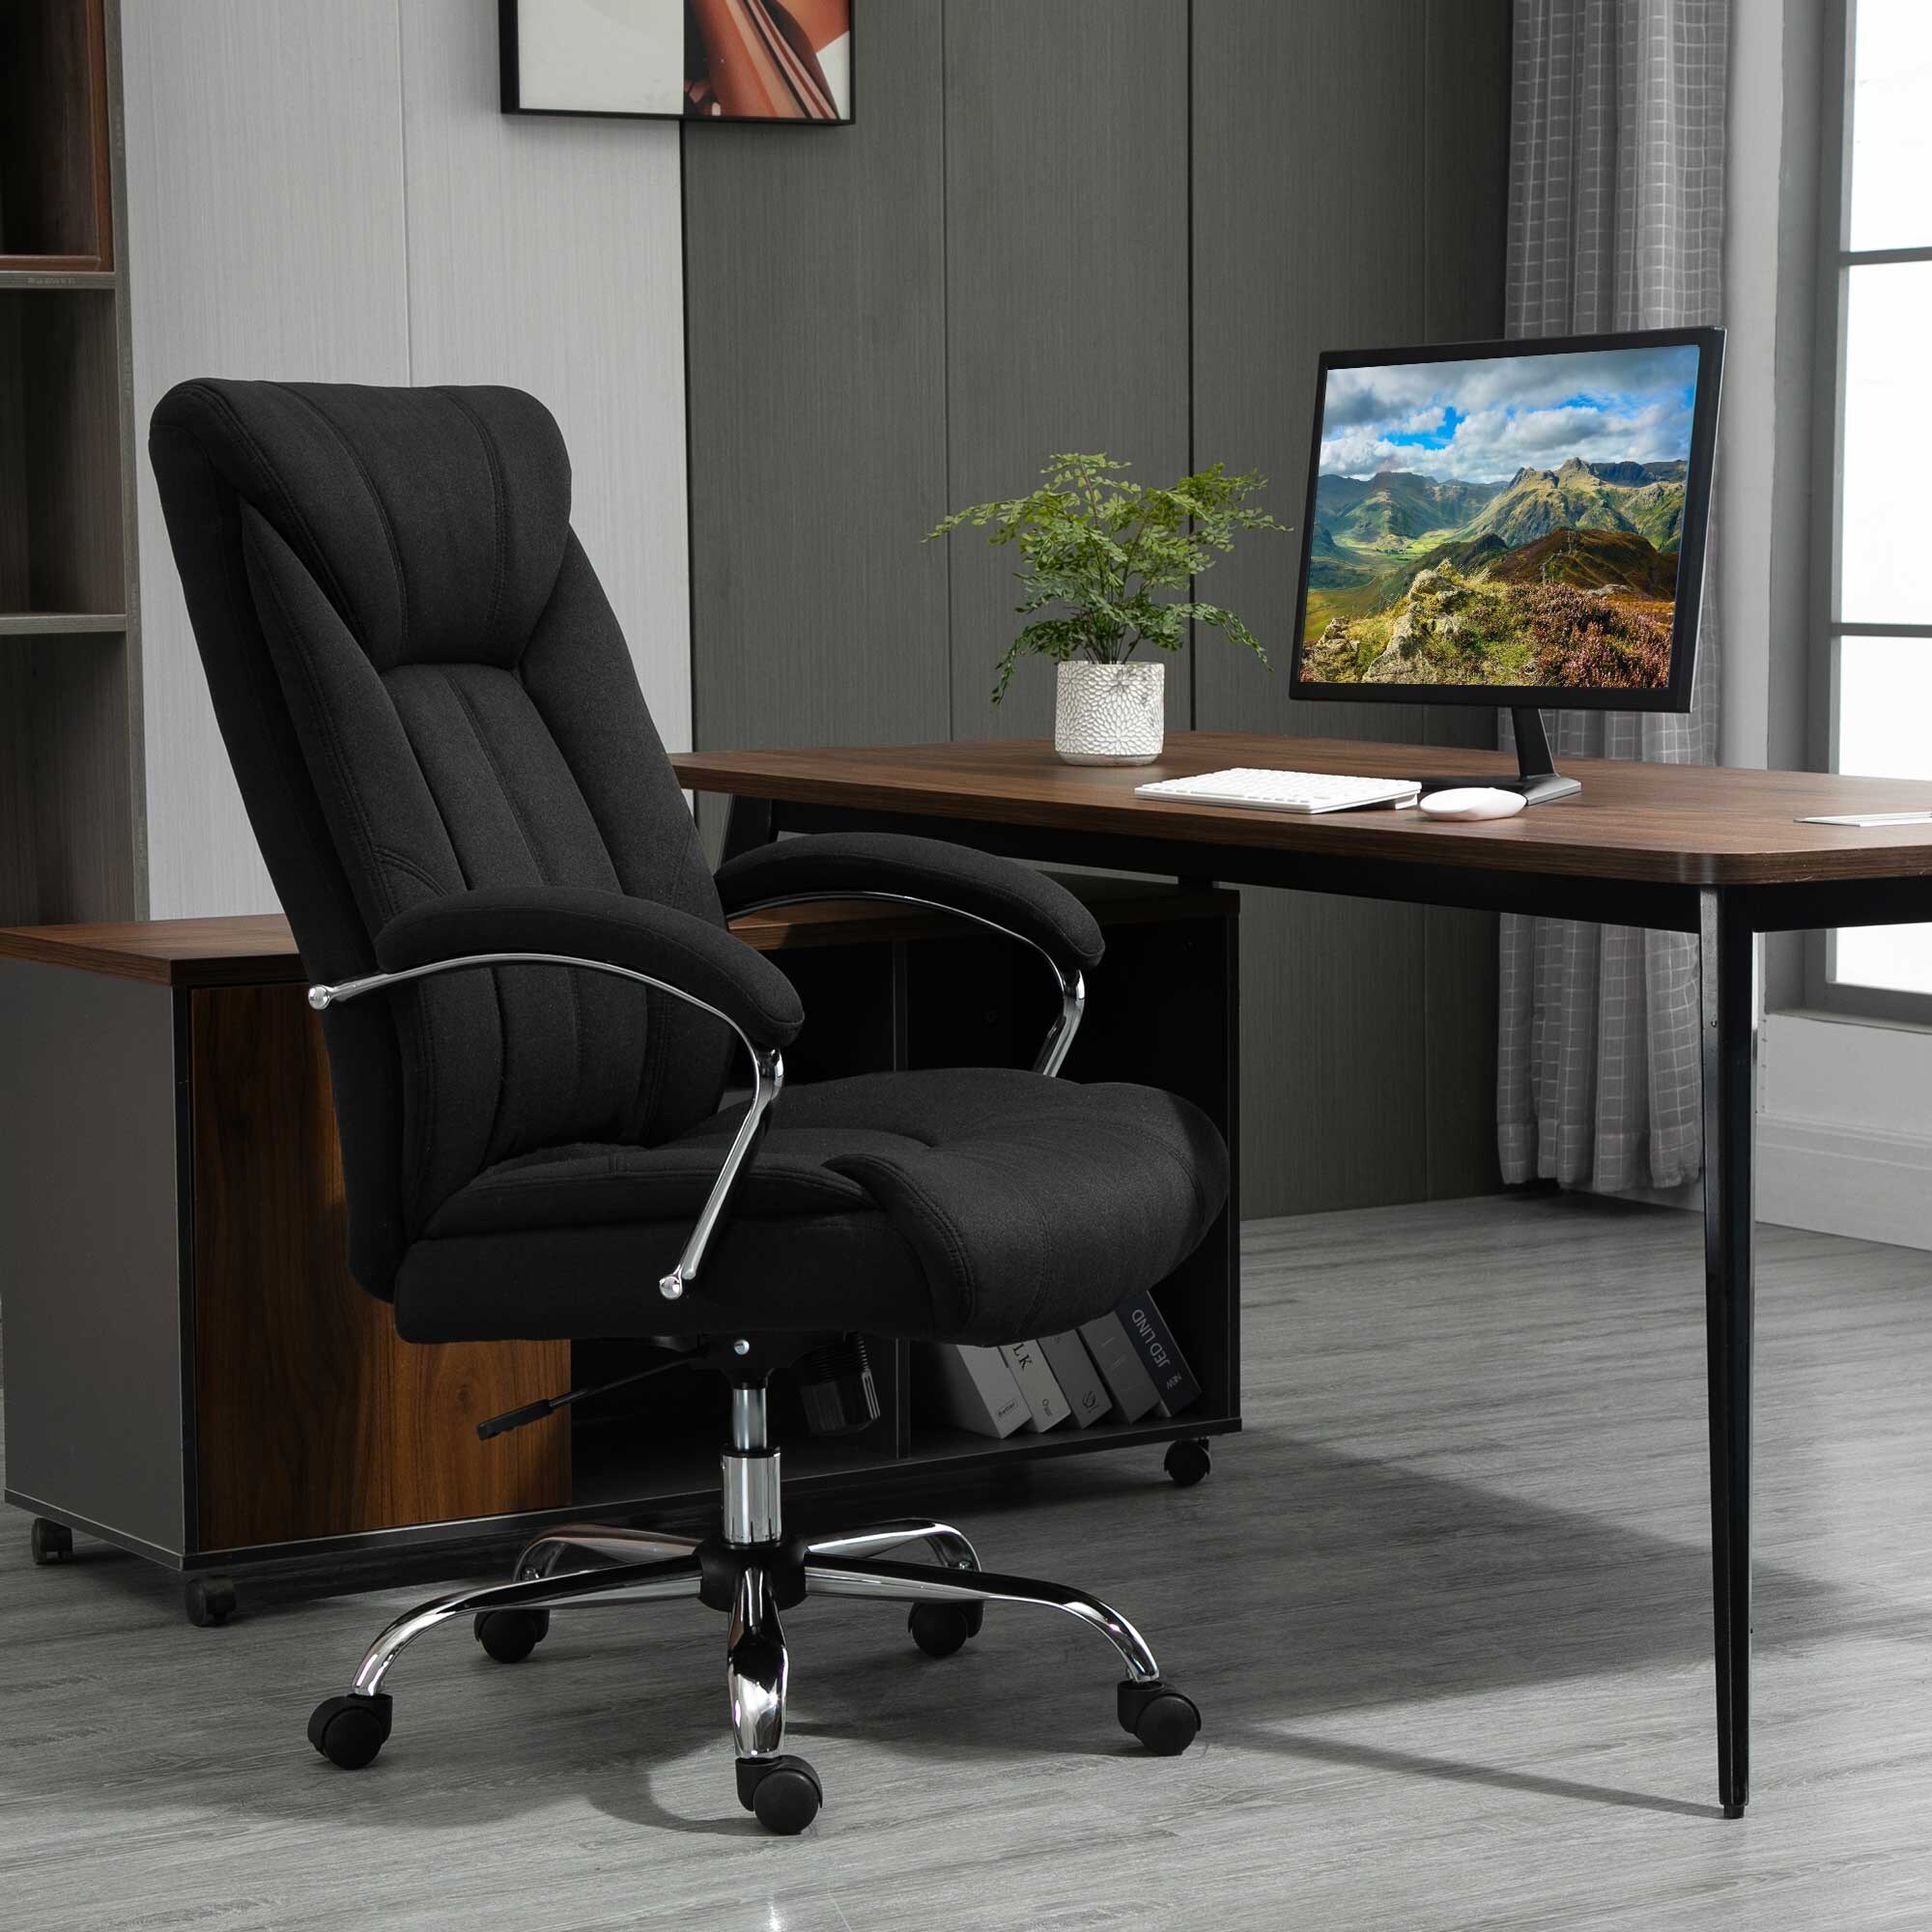 Ergonomic High Back Adjustable PC Desk Office Chair